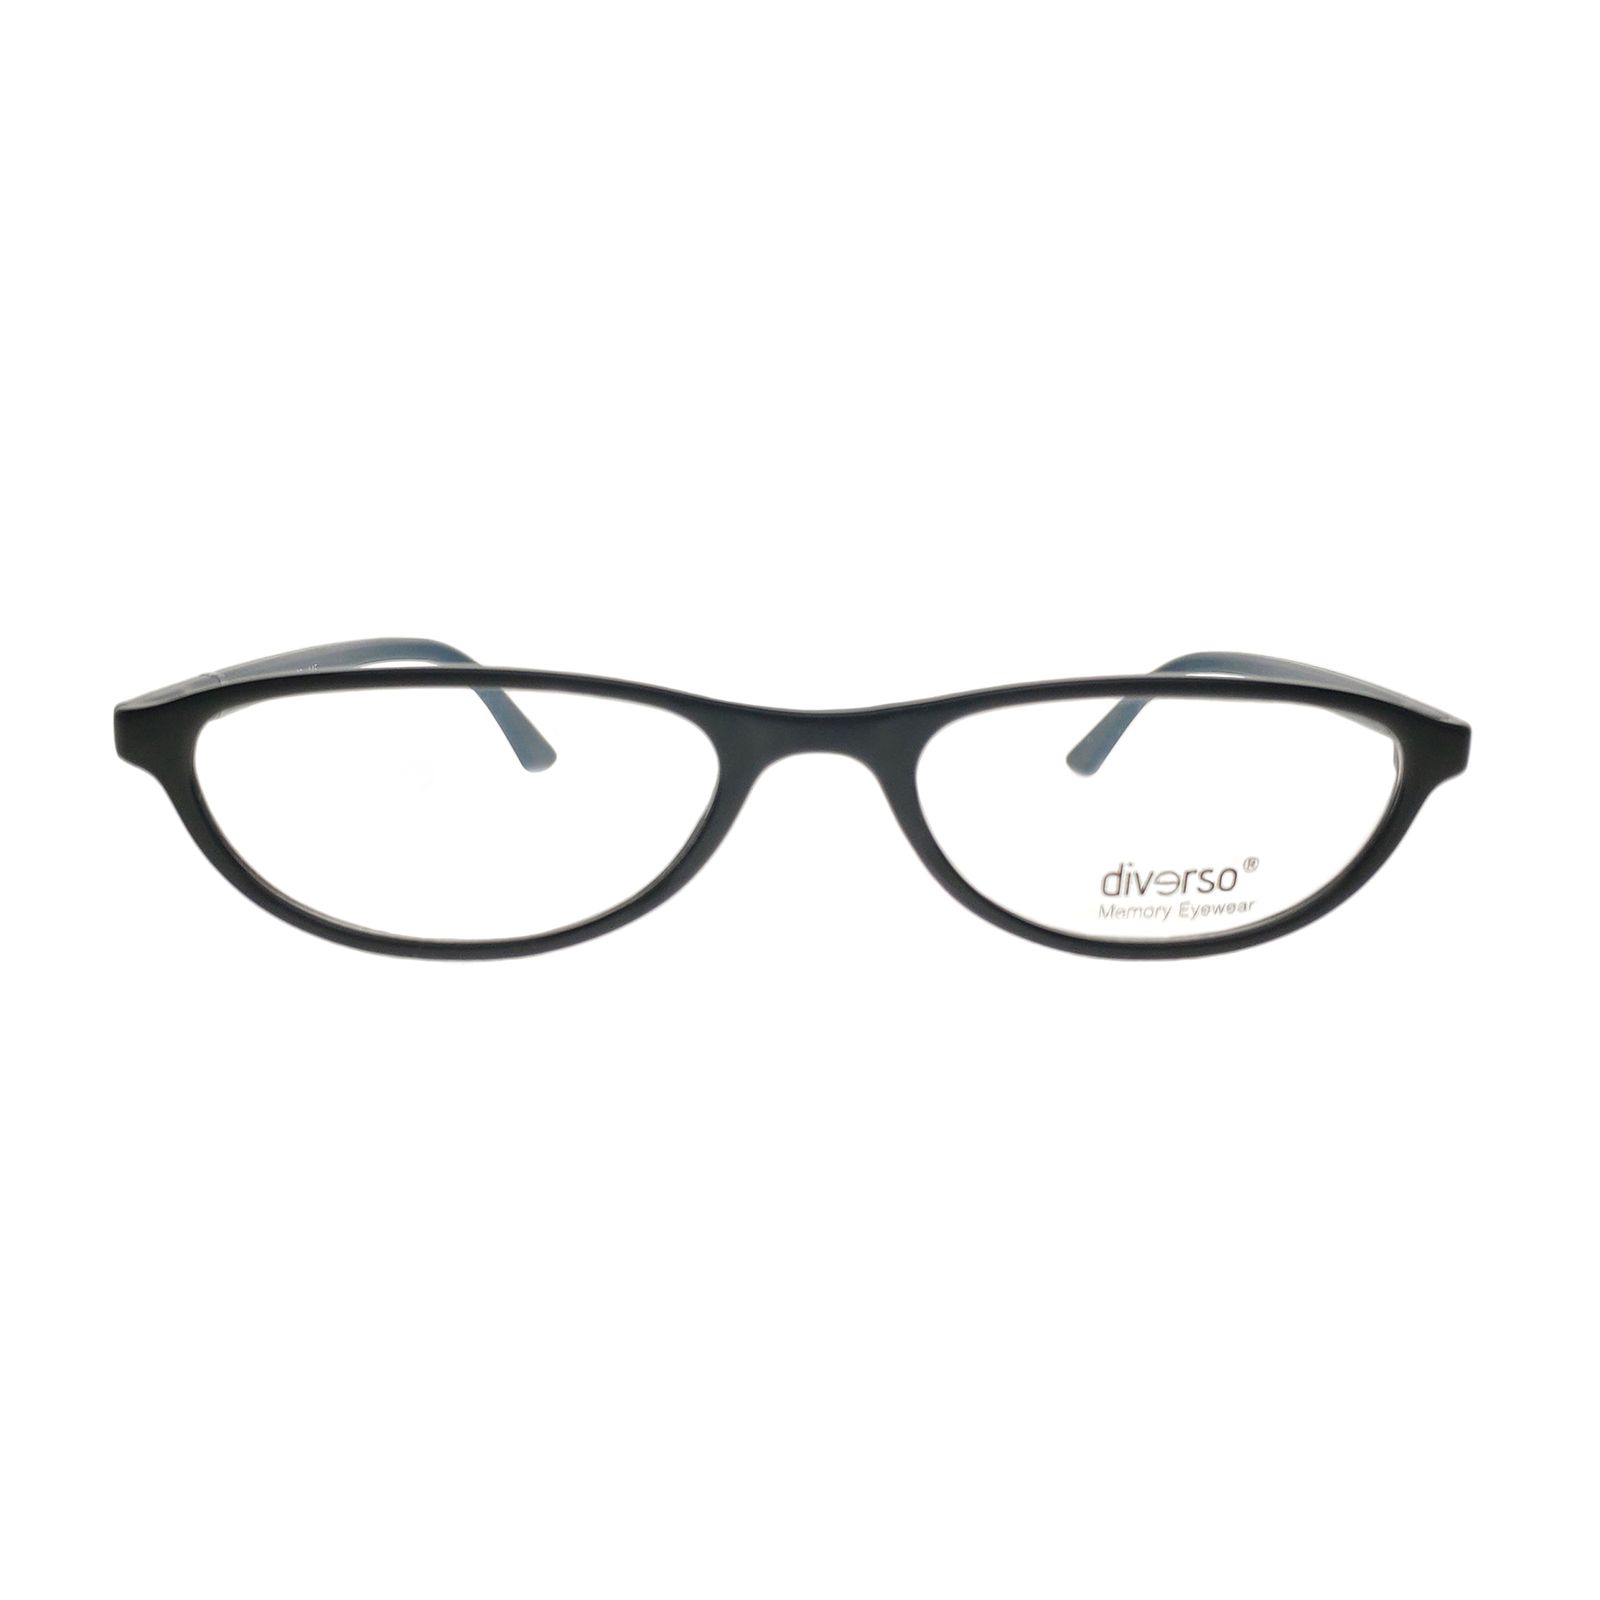 فریم عینک طبی دیورسو مدل 1647 - DV1206C0639 - 50.20.145 -  - 1